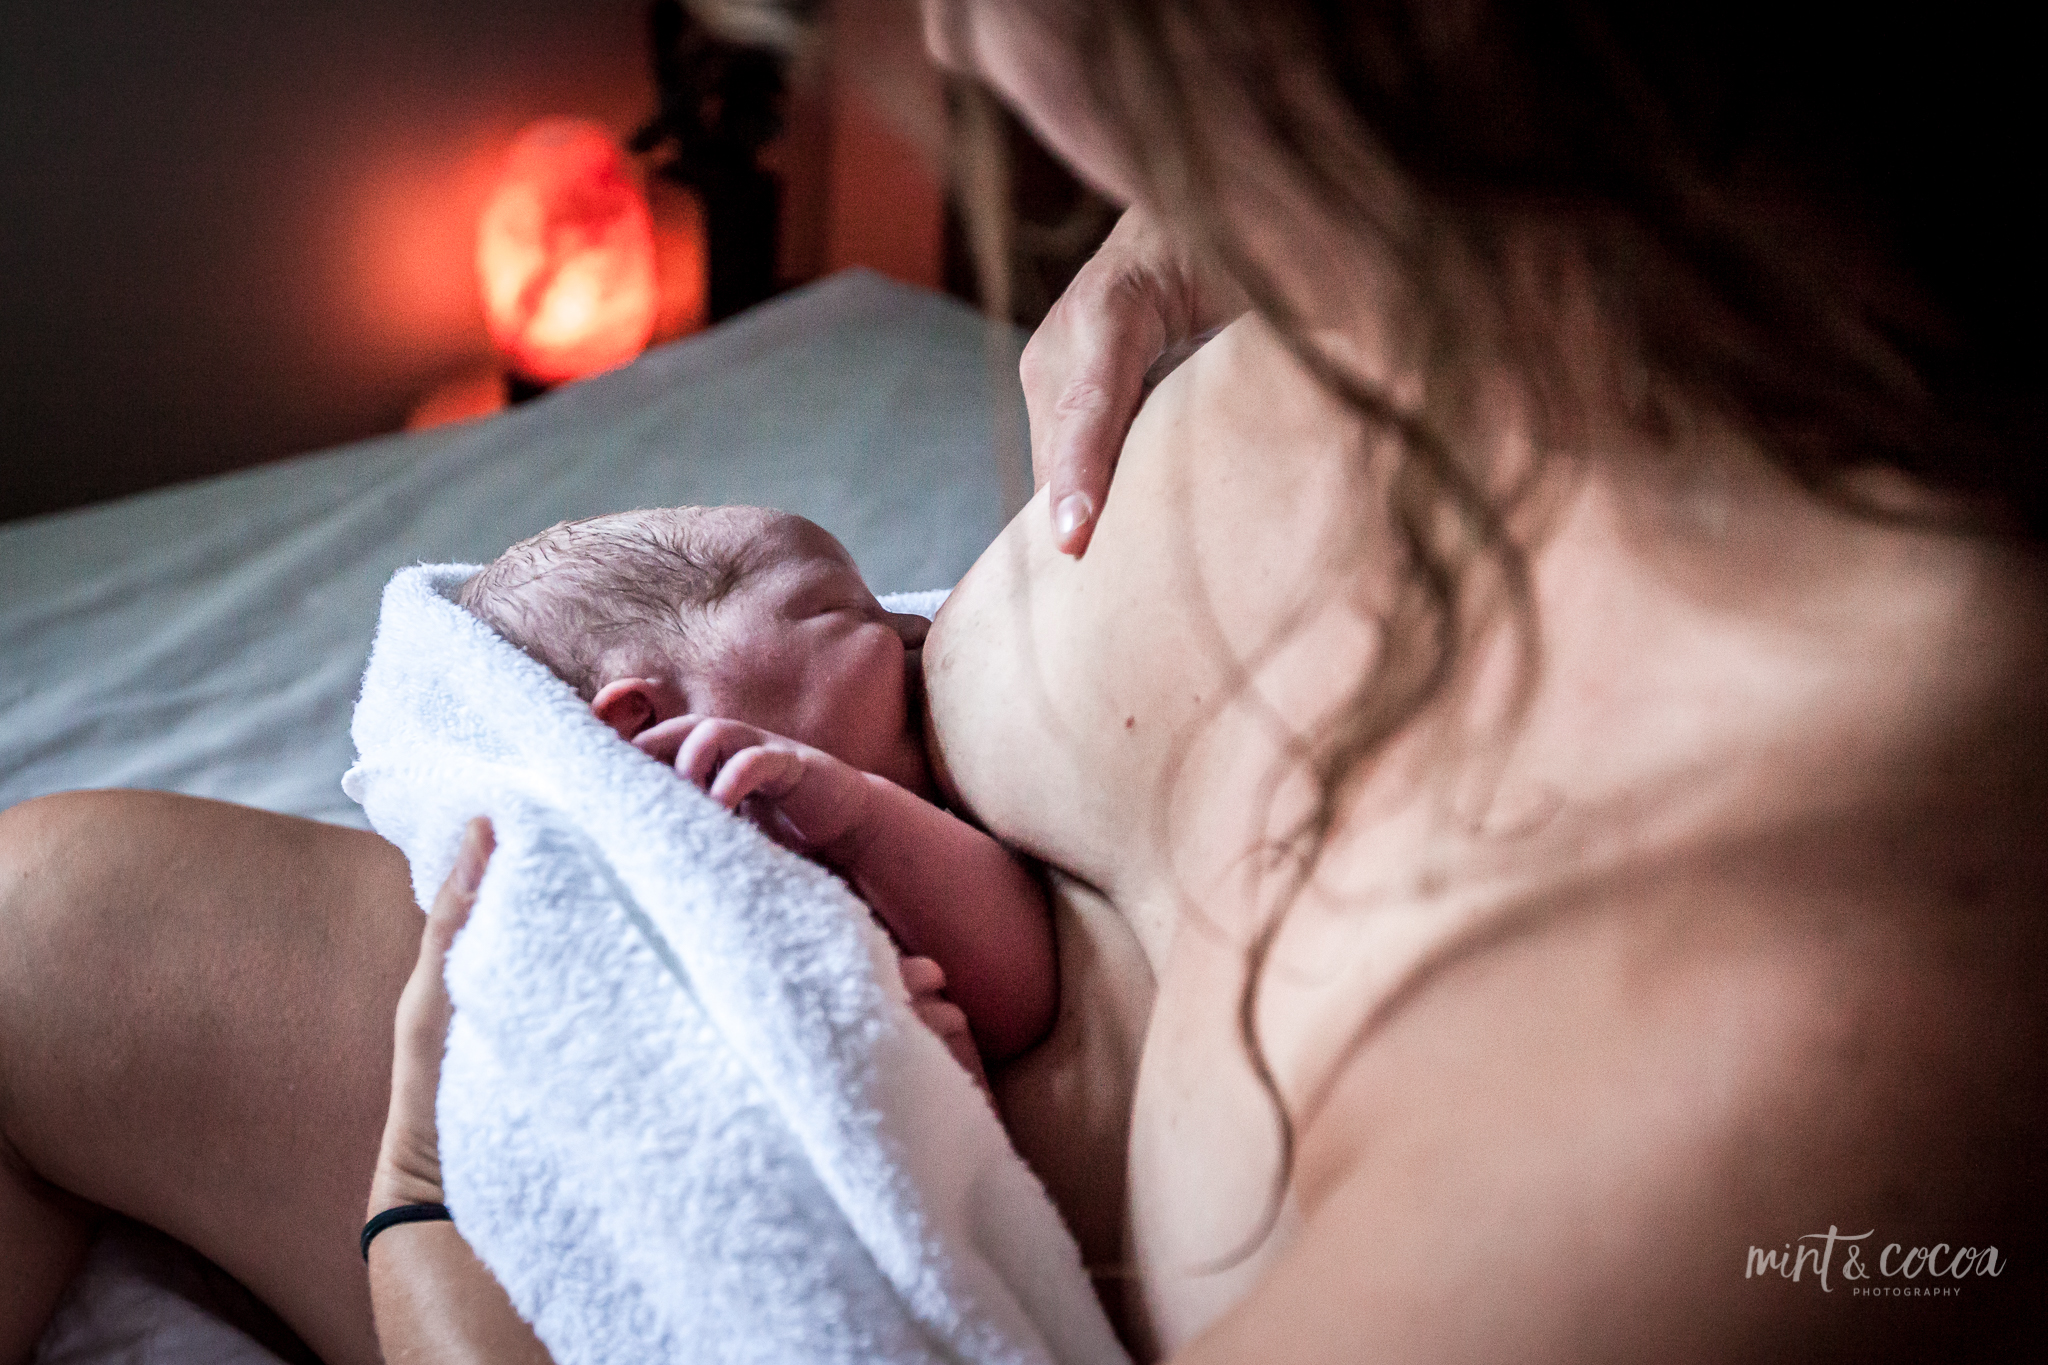 Natural-birthing-center-Magnolia-breastfeeding-support-home-birth.jpg